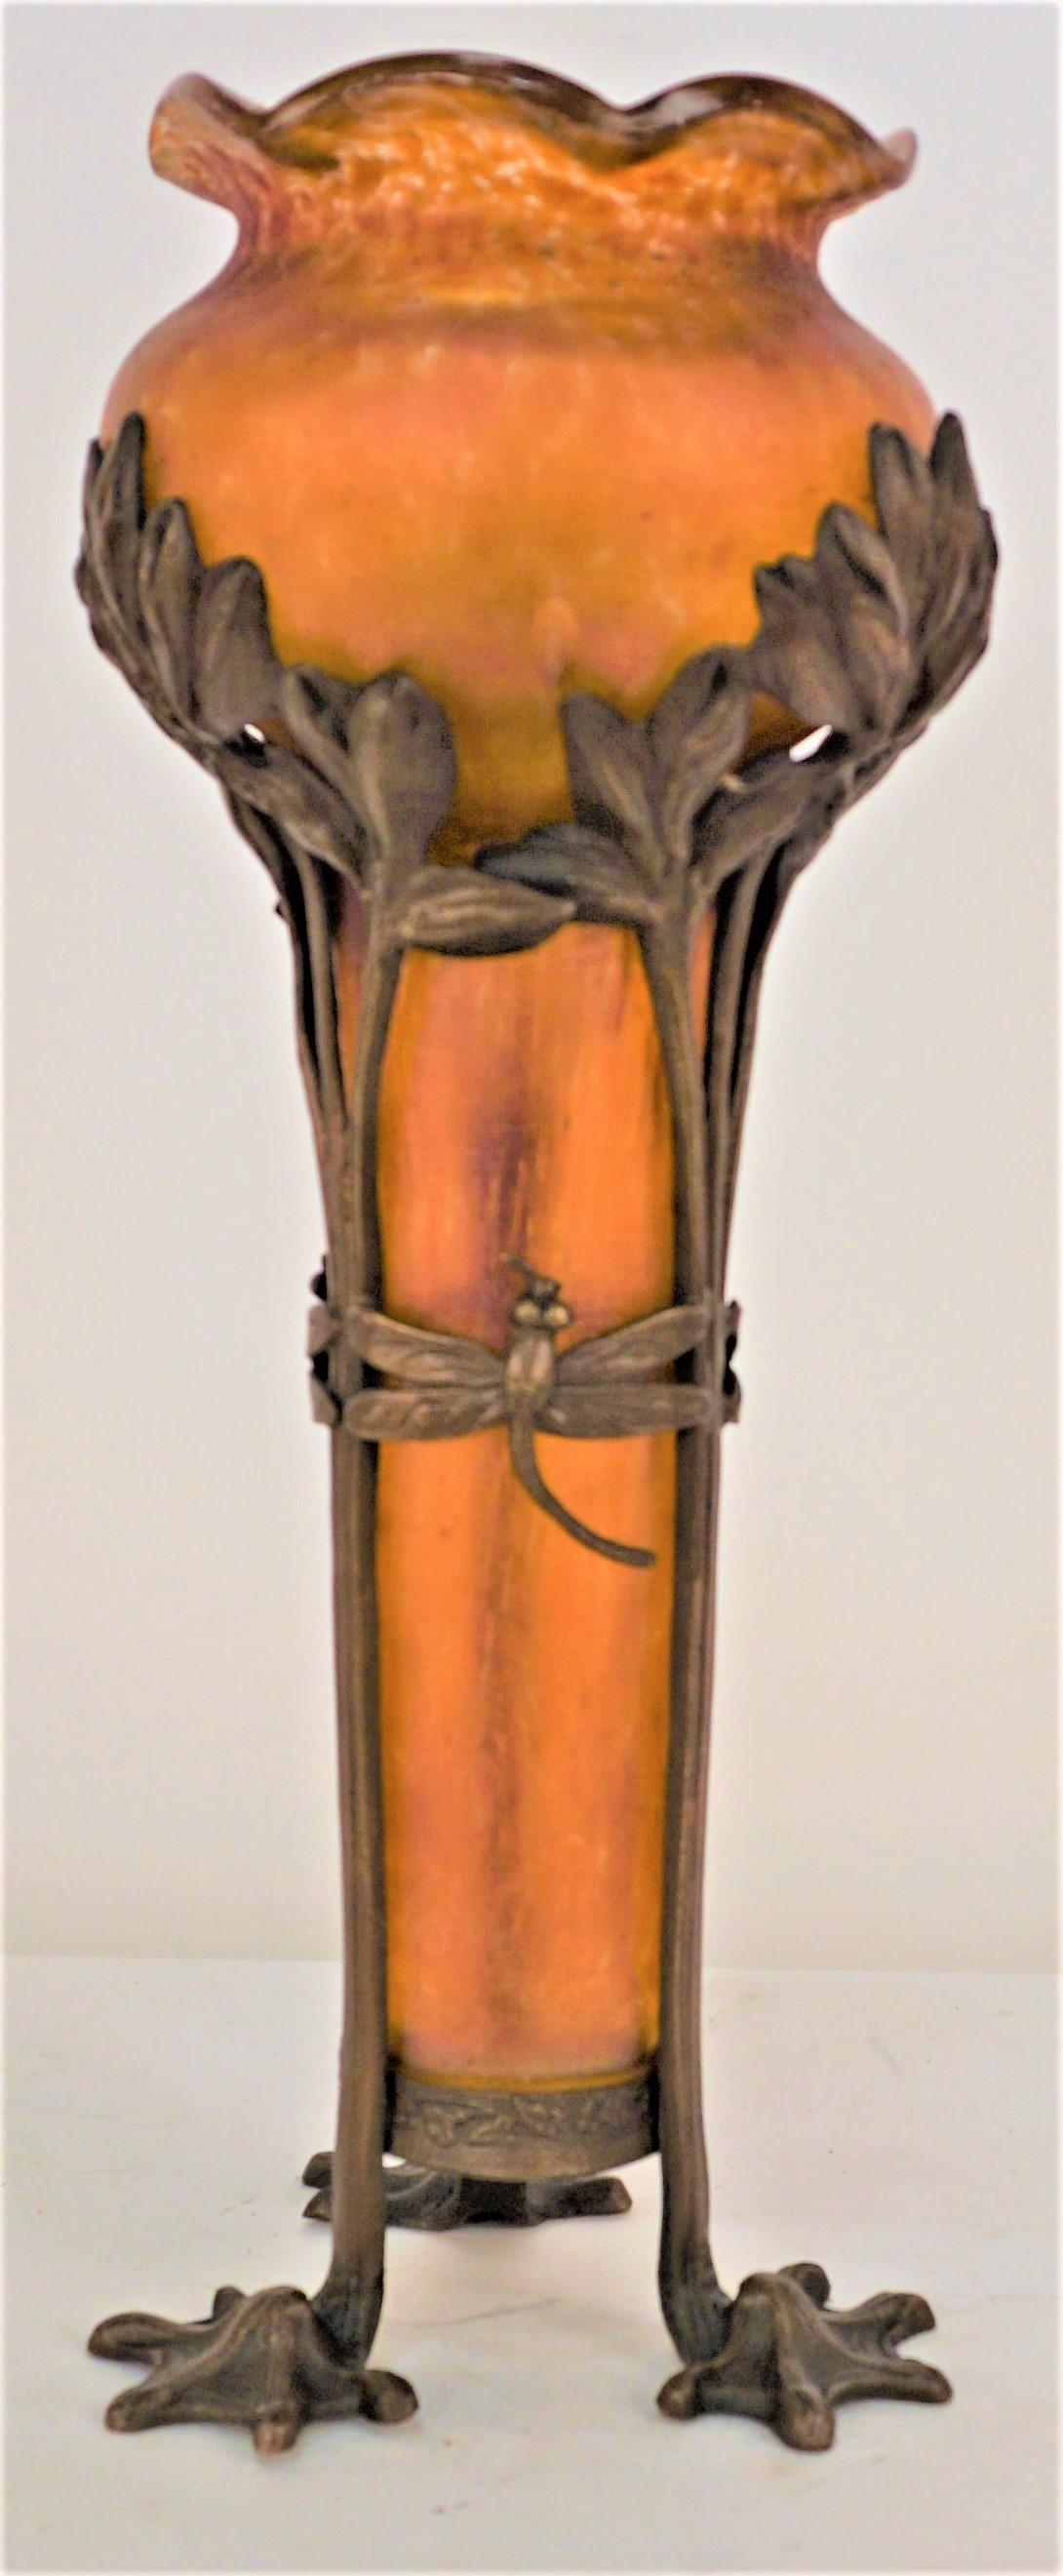 Patinated art nouveau bronze base with hand blown art glass insert vase.  